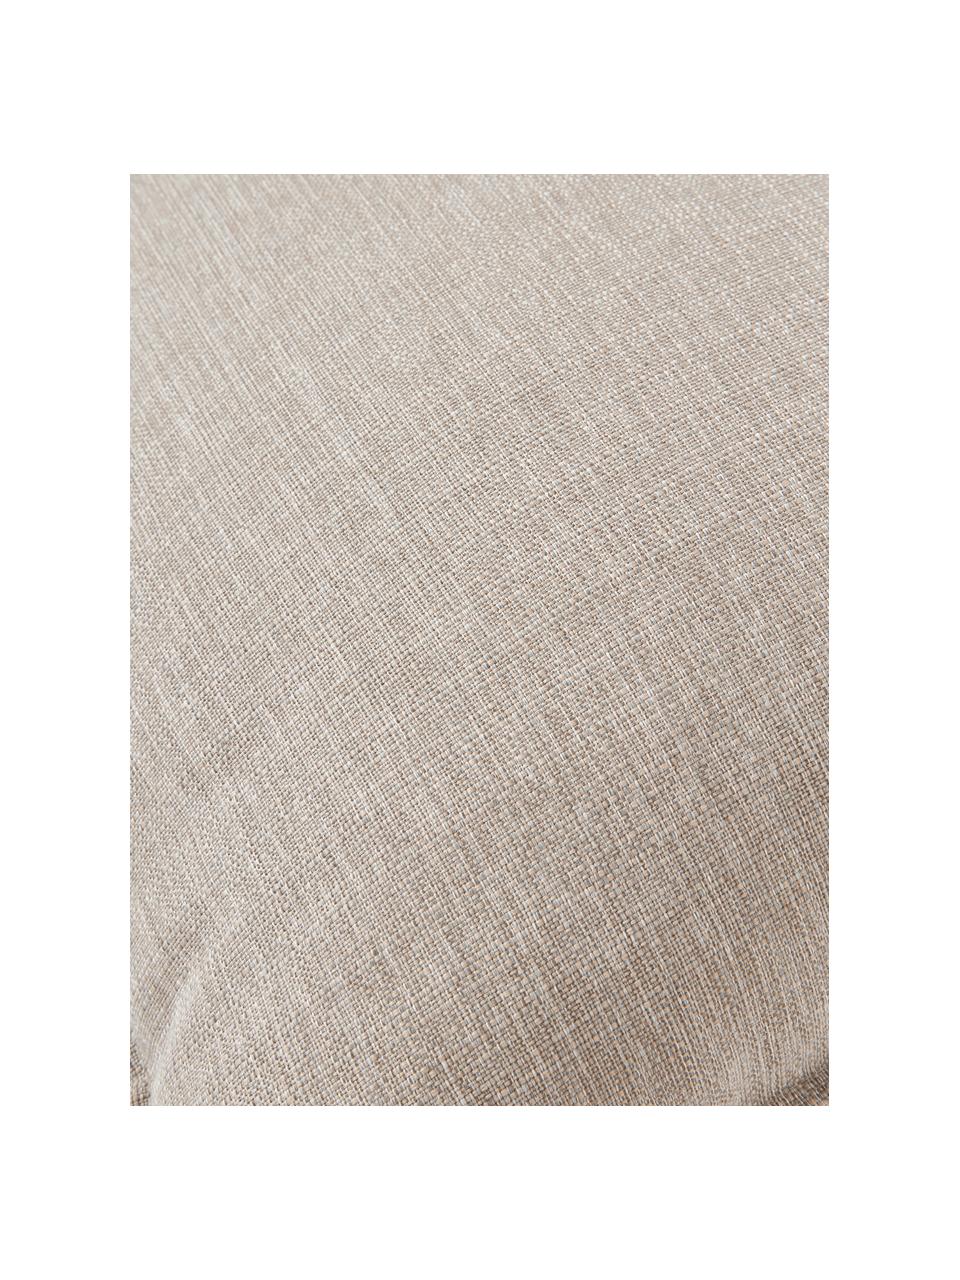 Cojín para exterior Oline, Funda: 60% algodón, 40% poliéste, Beige, An 30 x L 50 cm